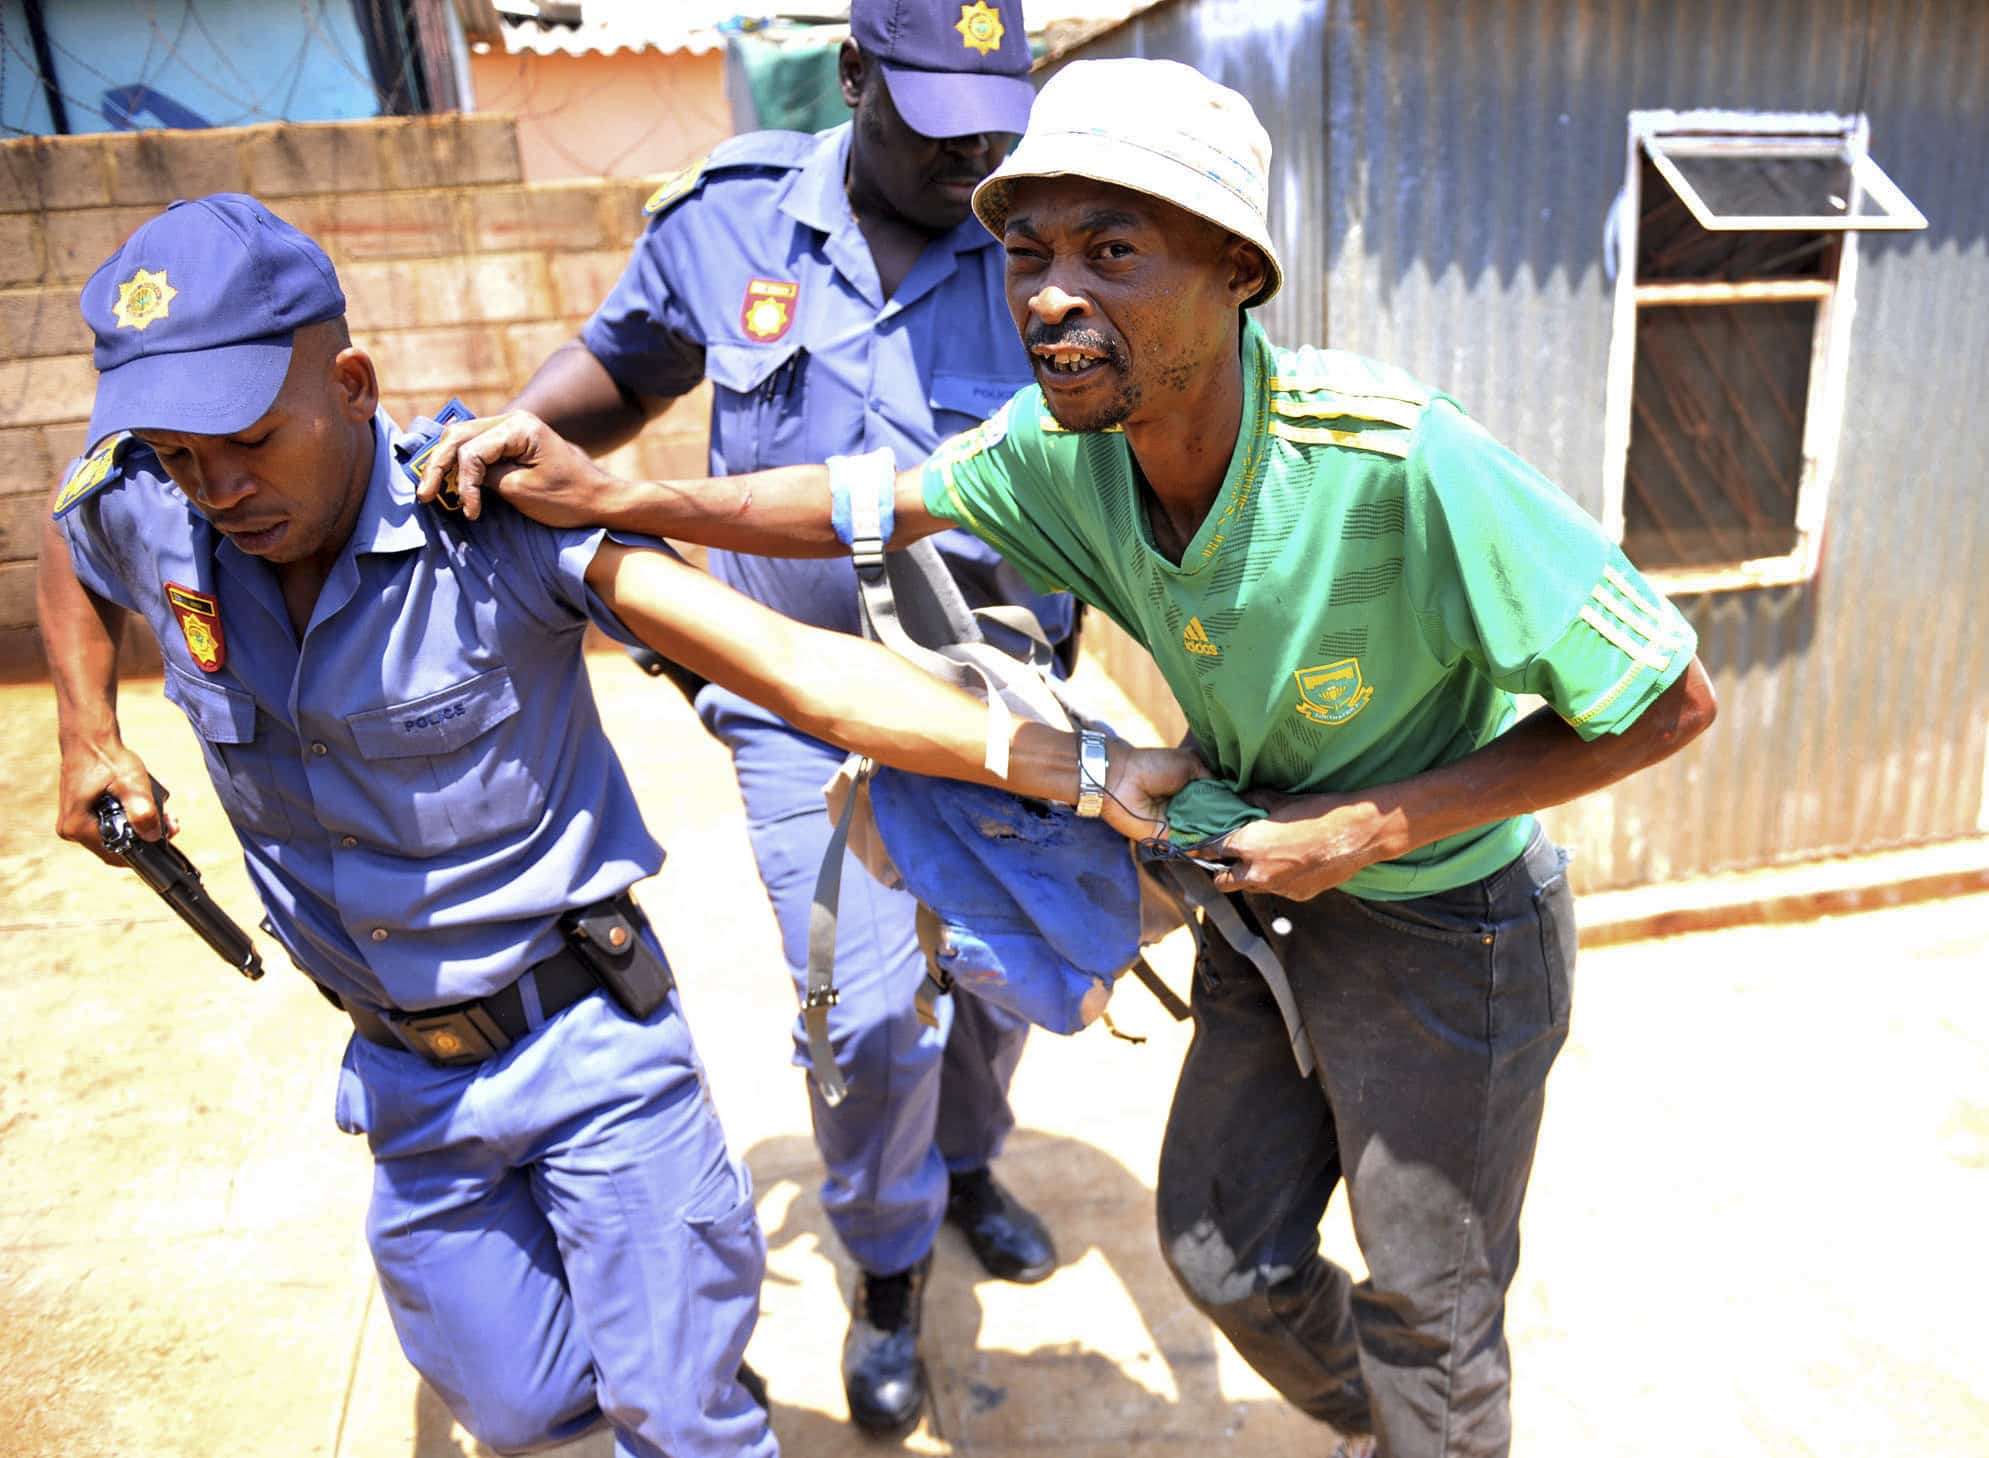 soweto uprising police